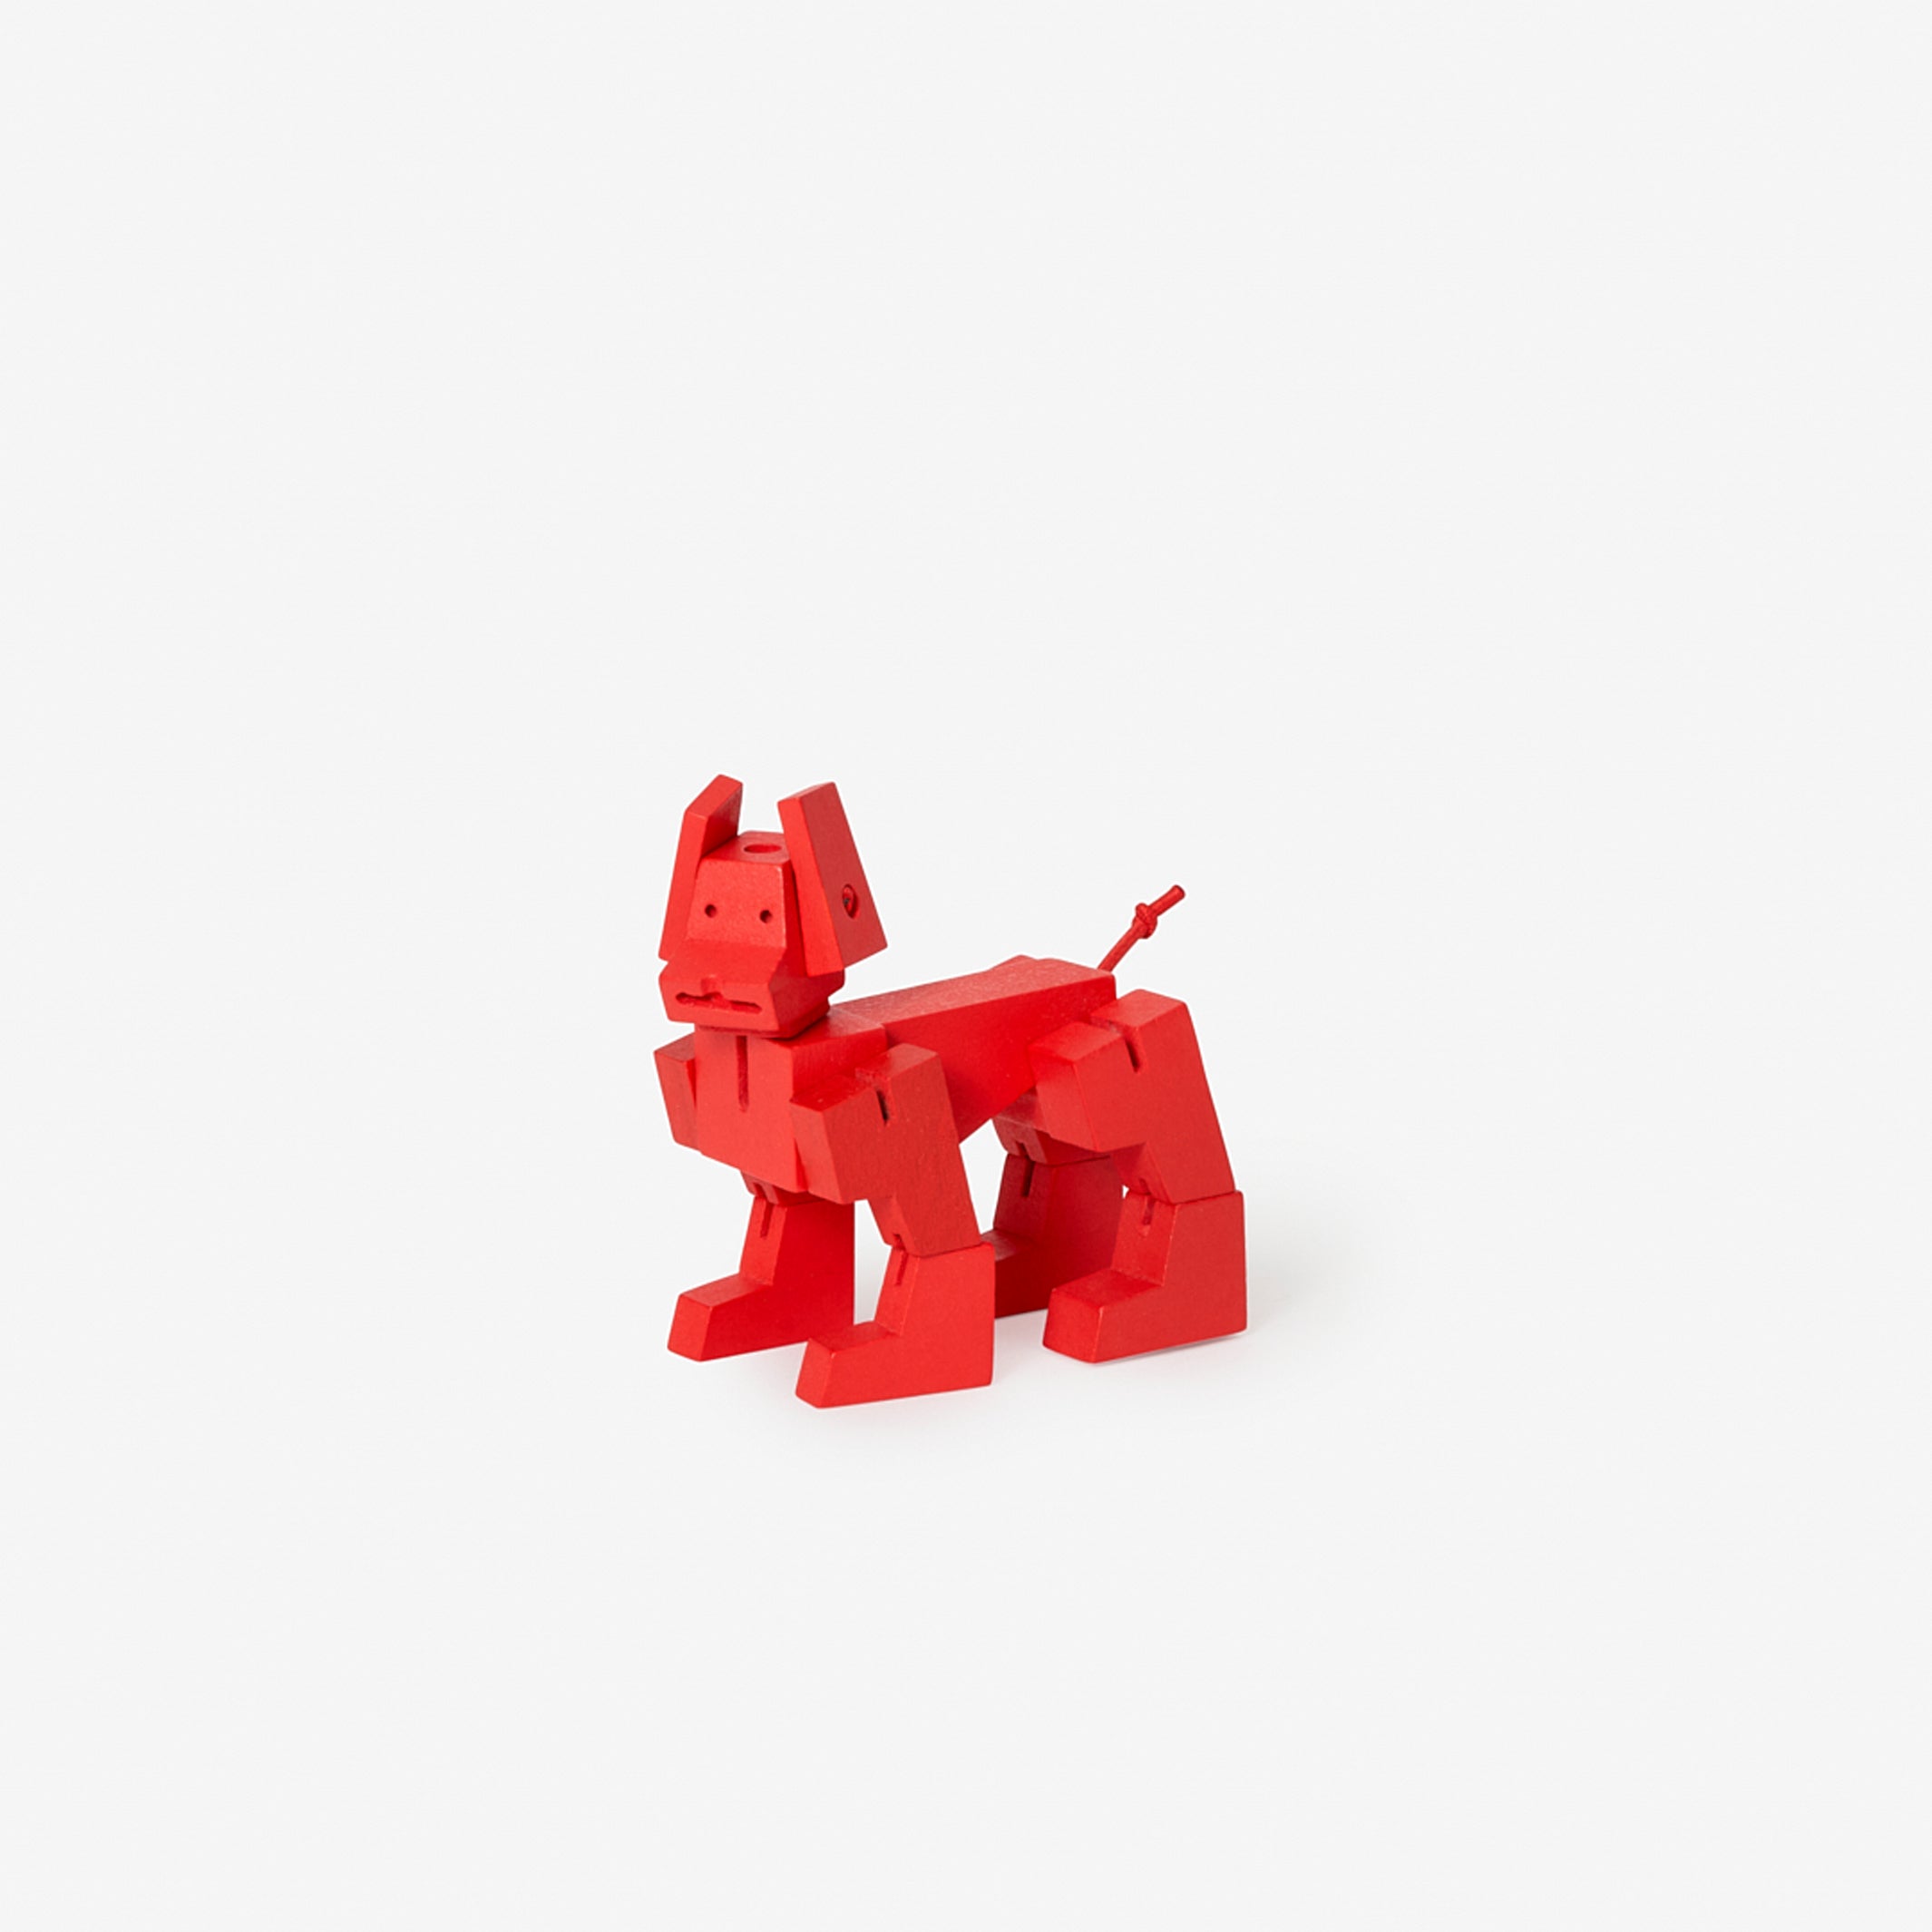 MILO CUBEBOT Micro | 3D PUZZLE ROBOTER | David Weeks | Areaware